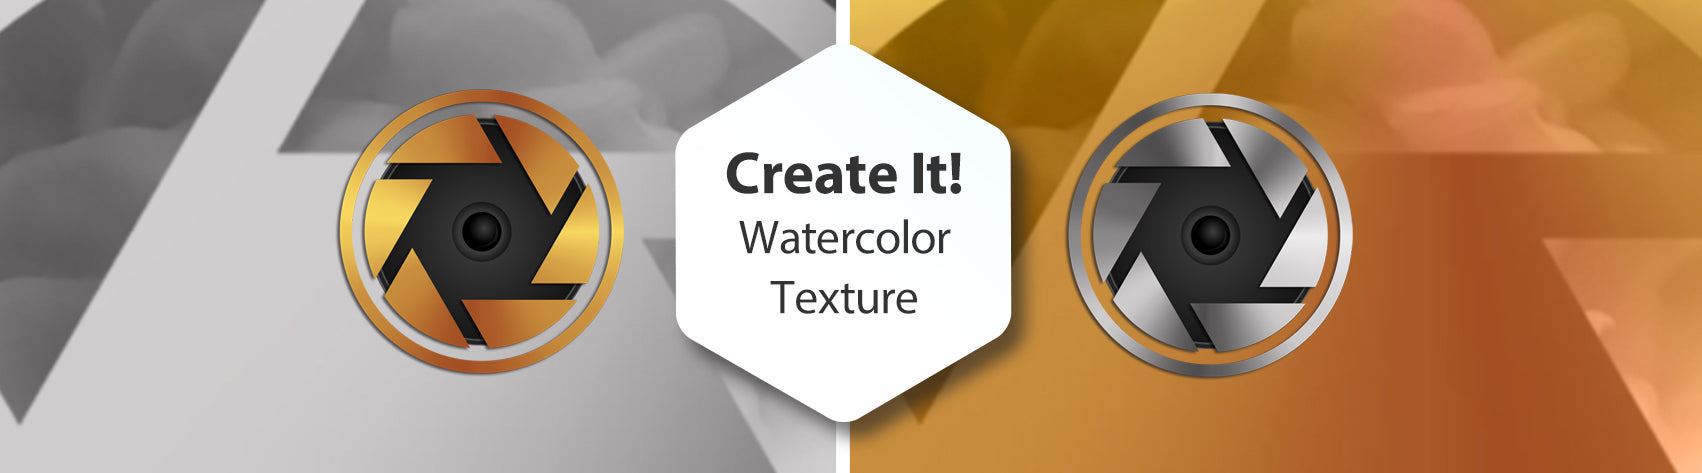 Create It! Watercolor Texture